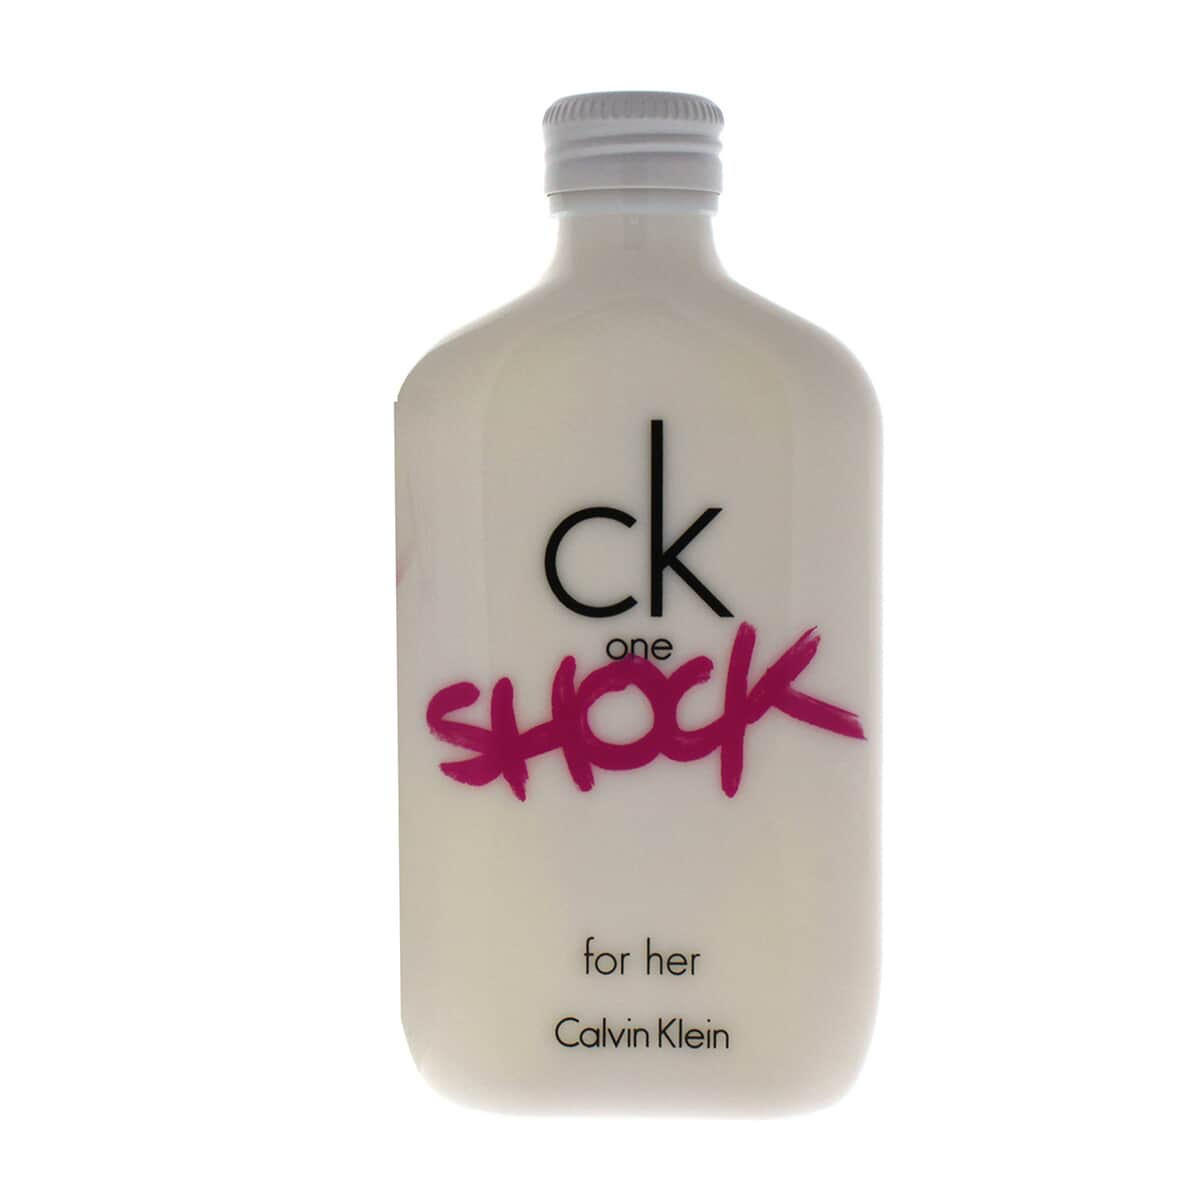 CK One Shock For Her Eau De Toilette 6.7 Oz image number 3